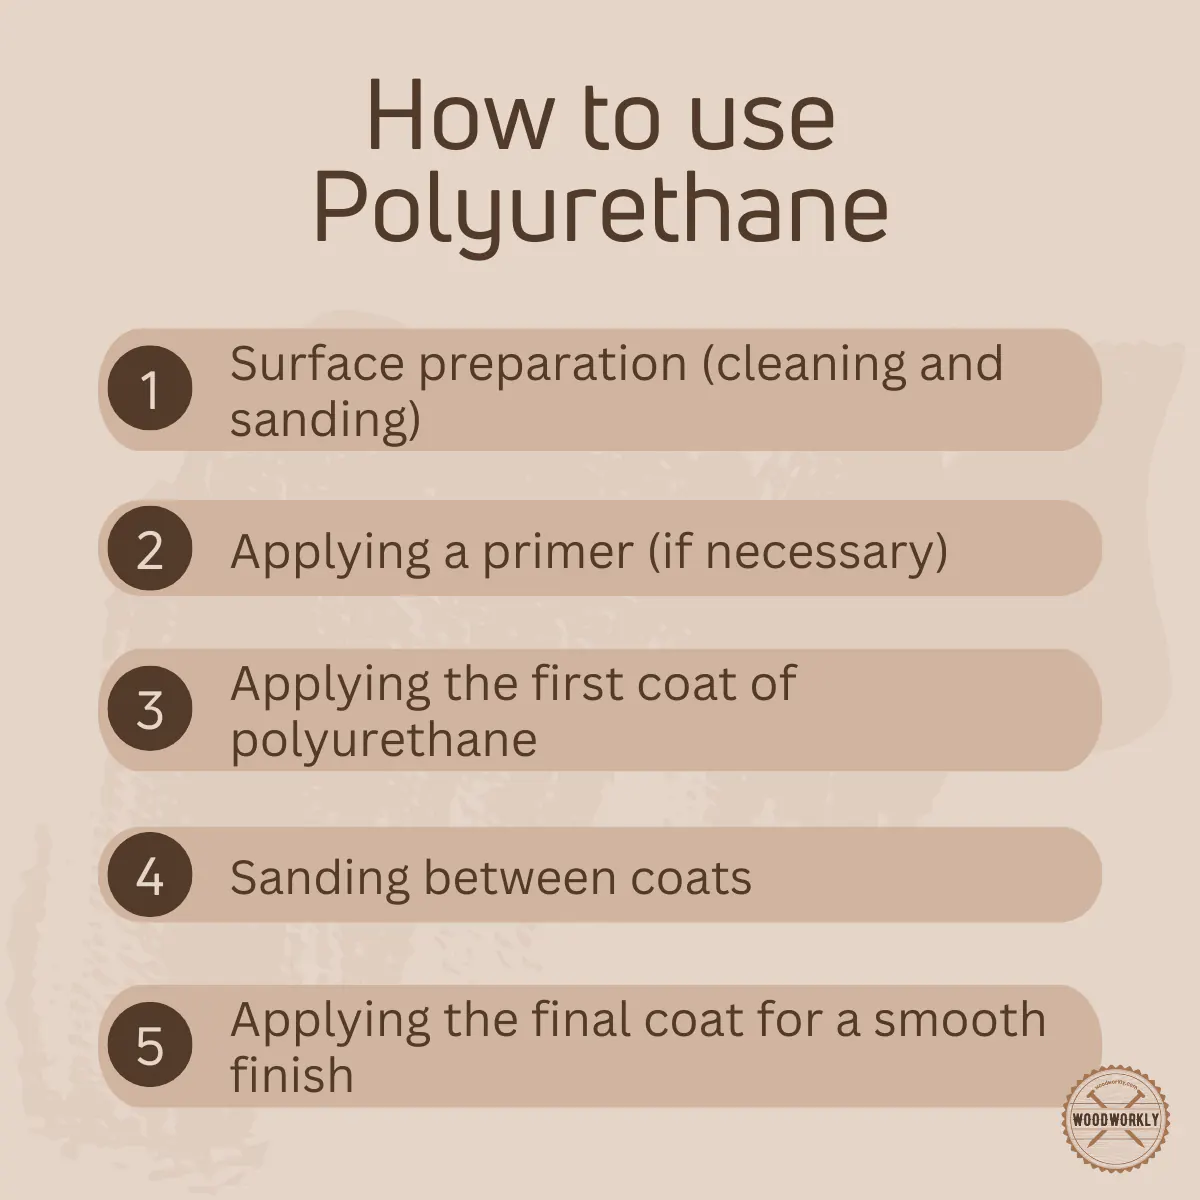 How to use Polyurethane